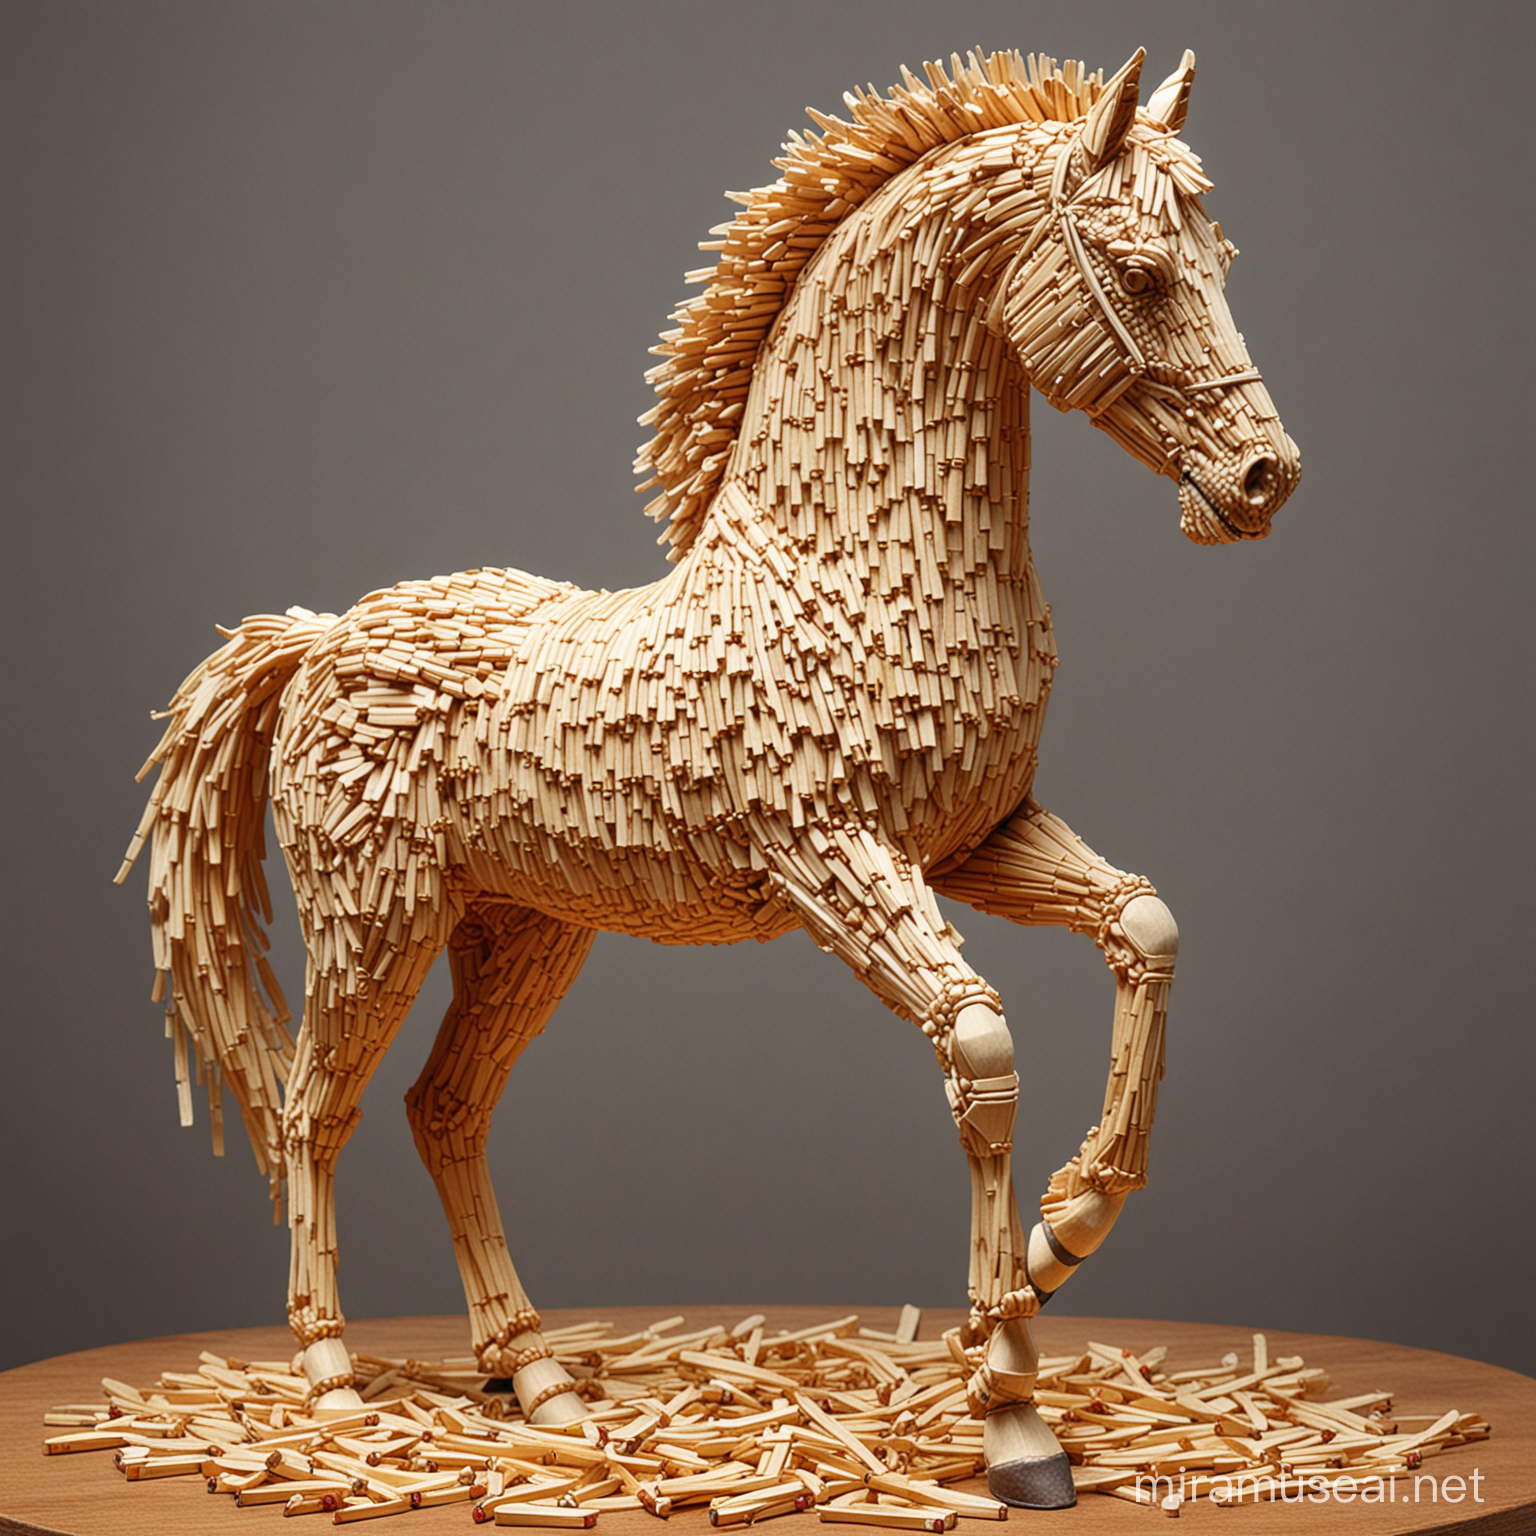 Stunning Horse Sculpture Crafted from Matchsticks